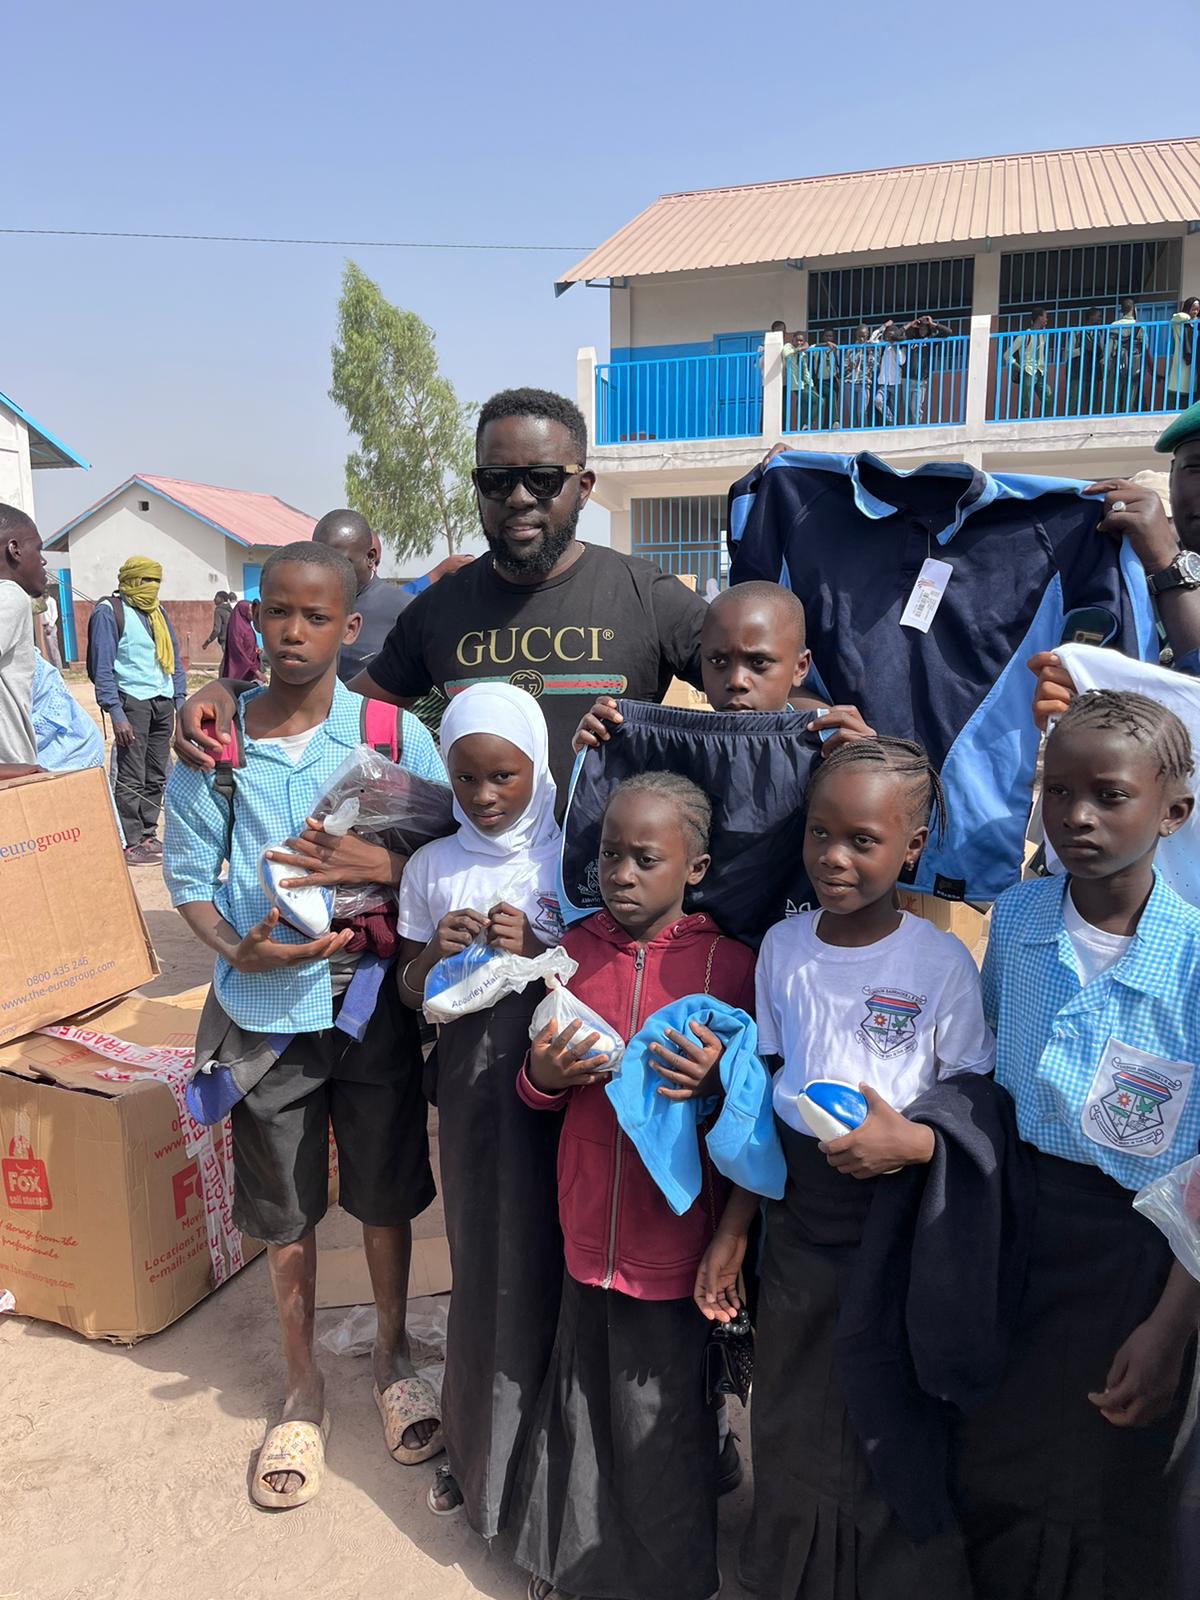 Sergeant Maxi helps School children in the Gambia